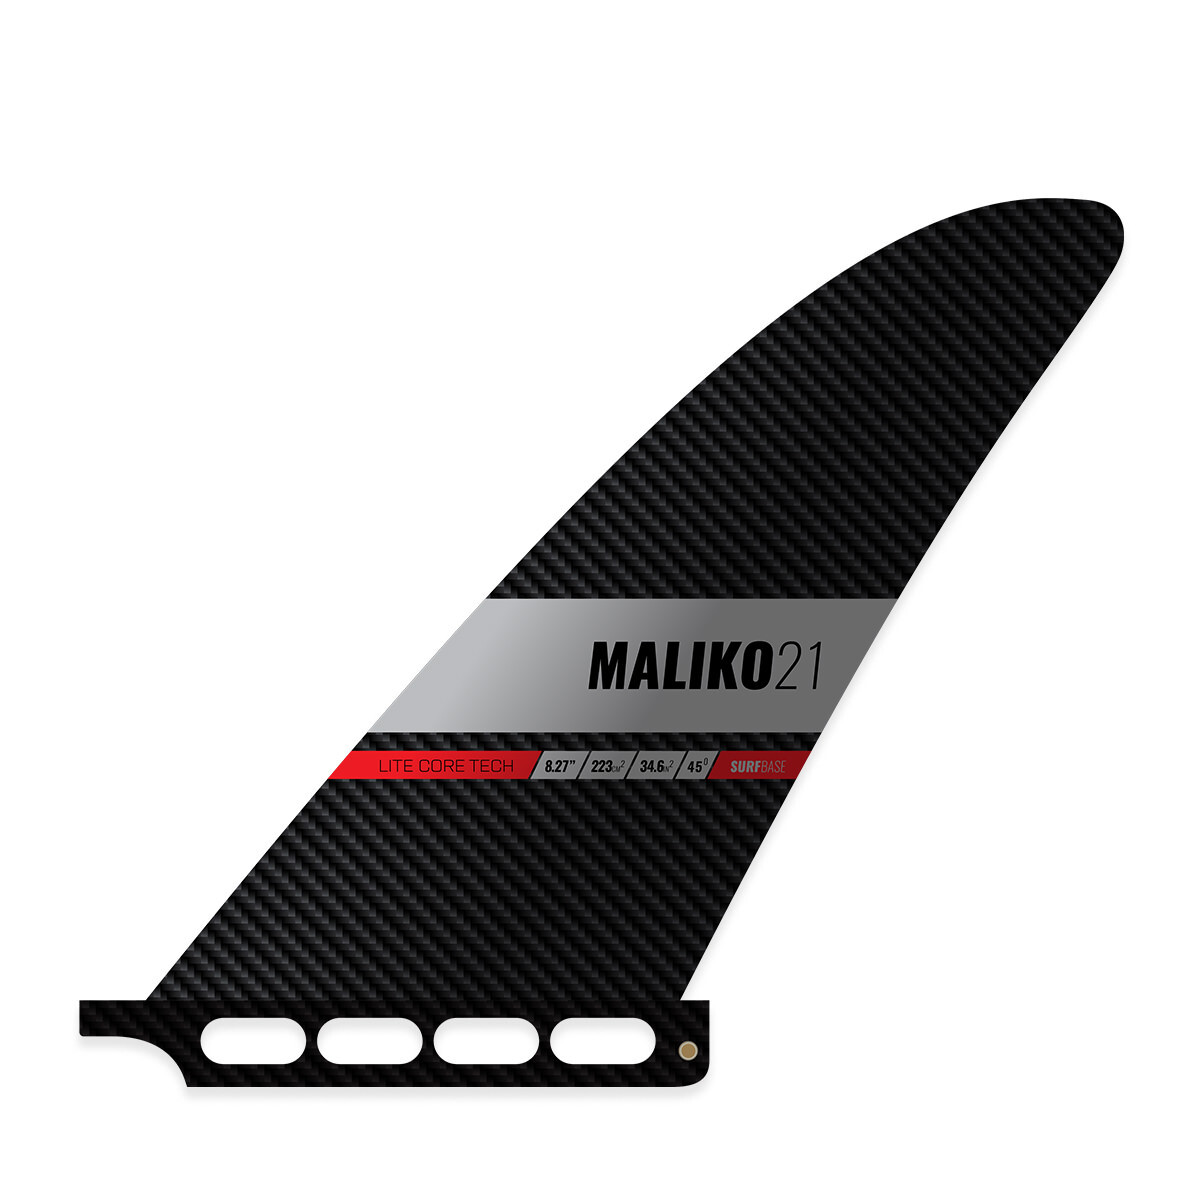 MALIKO V3, race DW/OCEAN/SURF, UL carbon